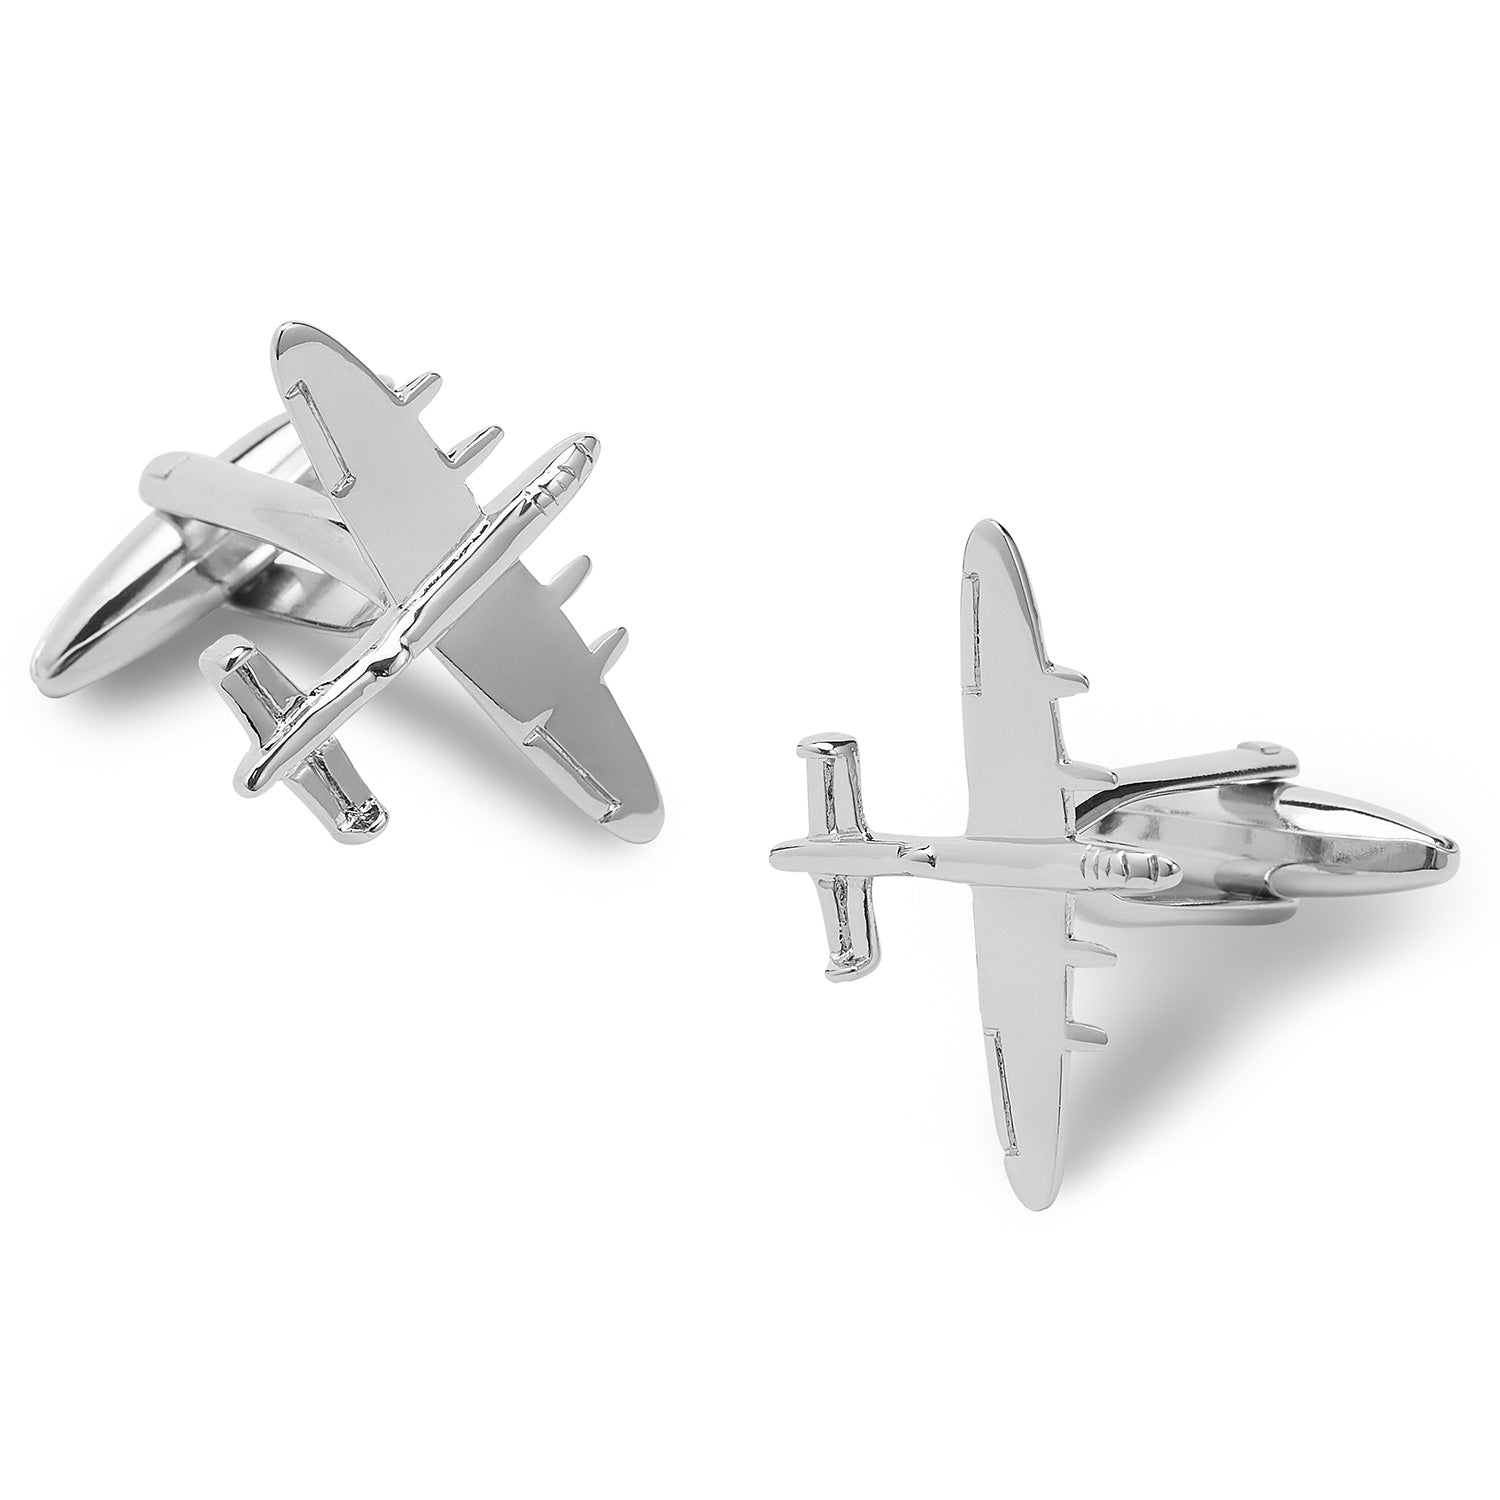 Flying Fortress Propeller Aircraft Cufflinks